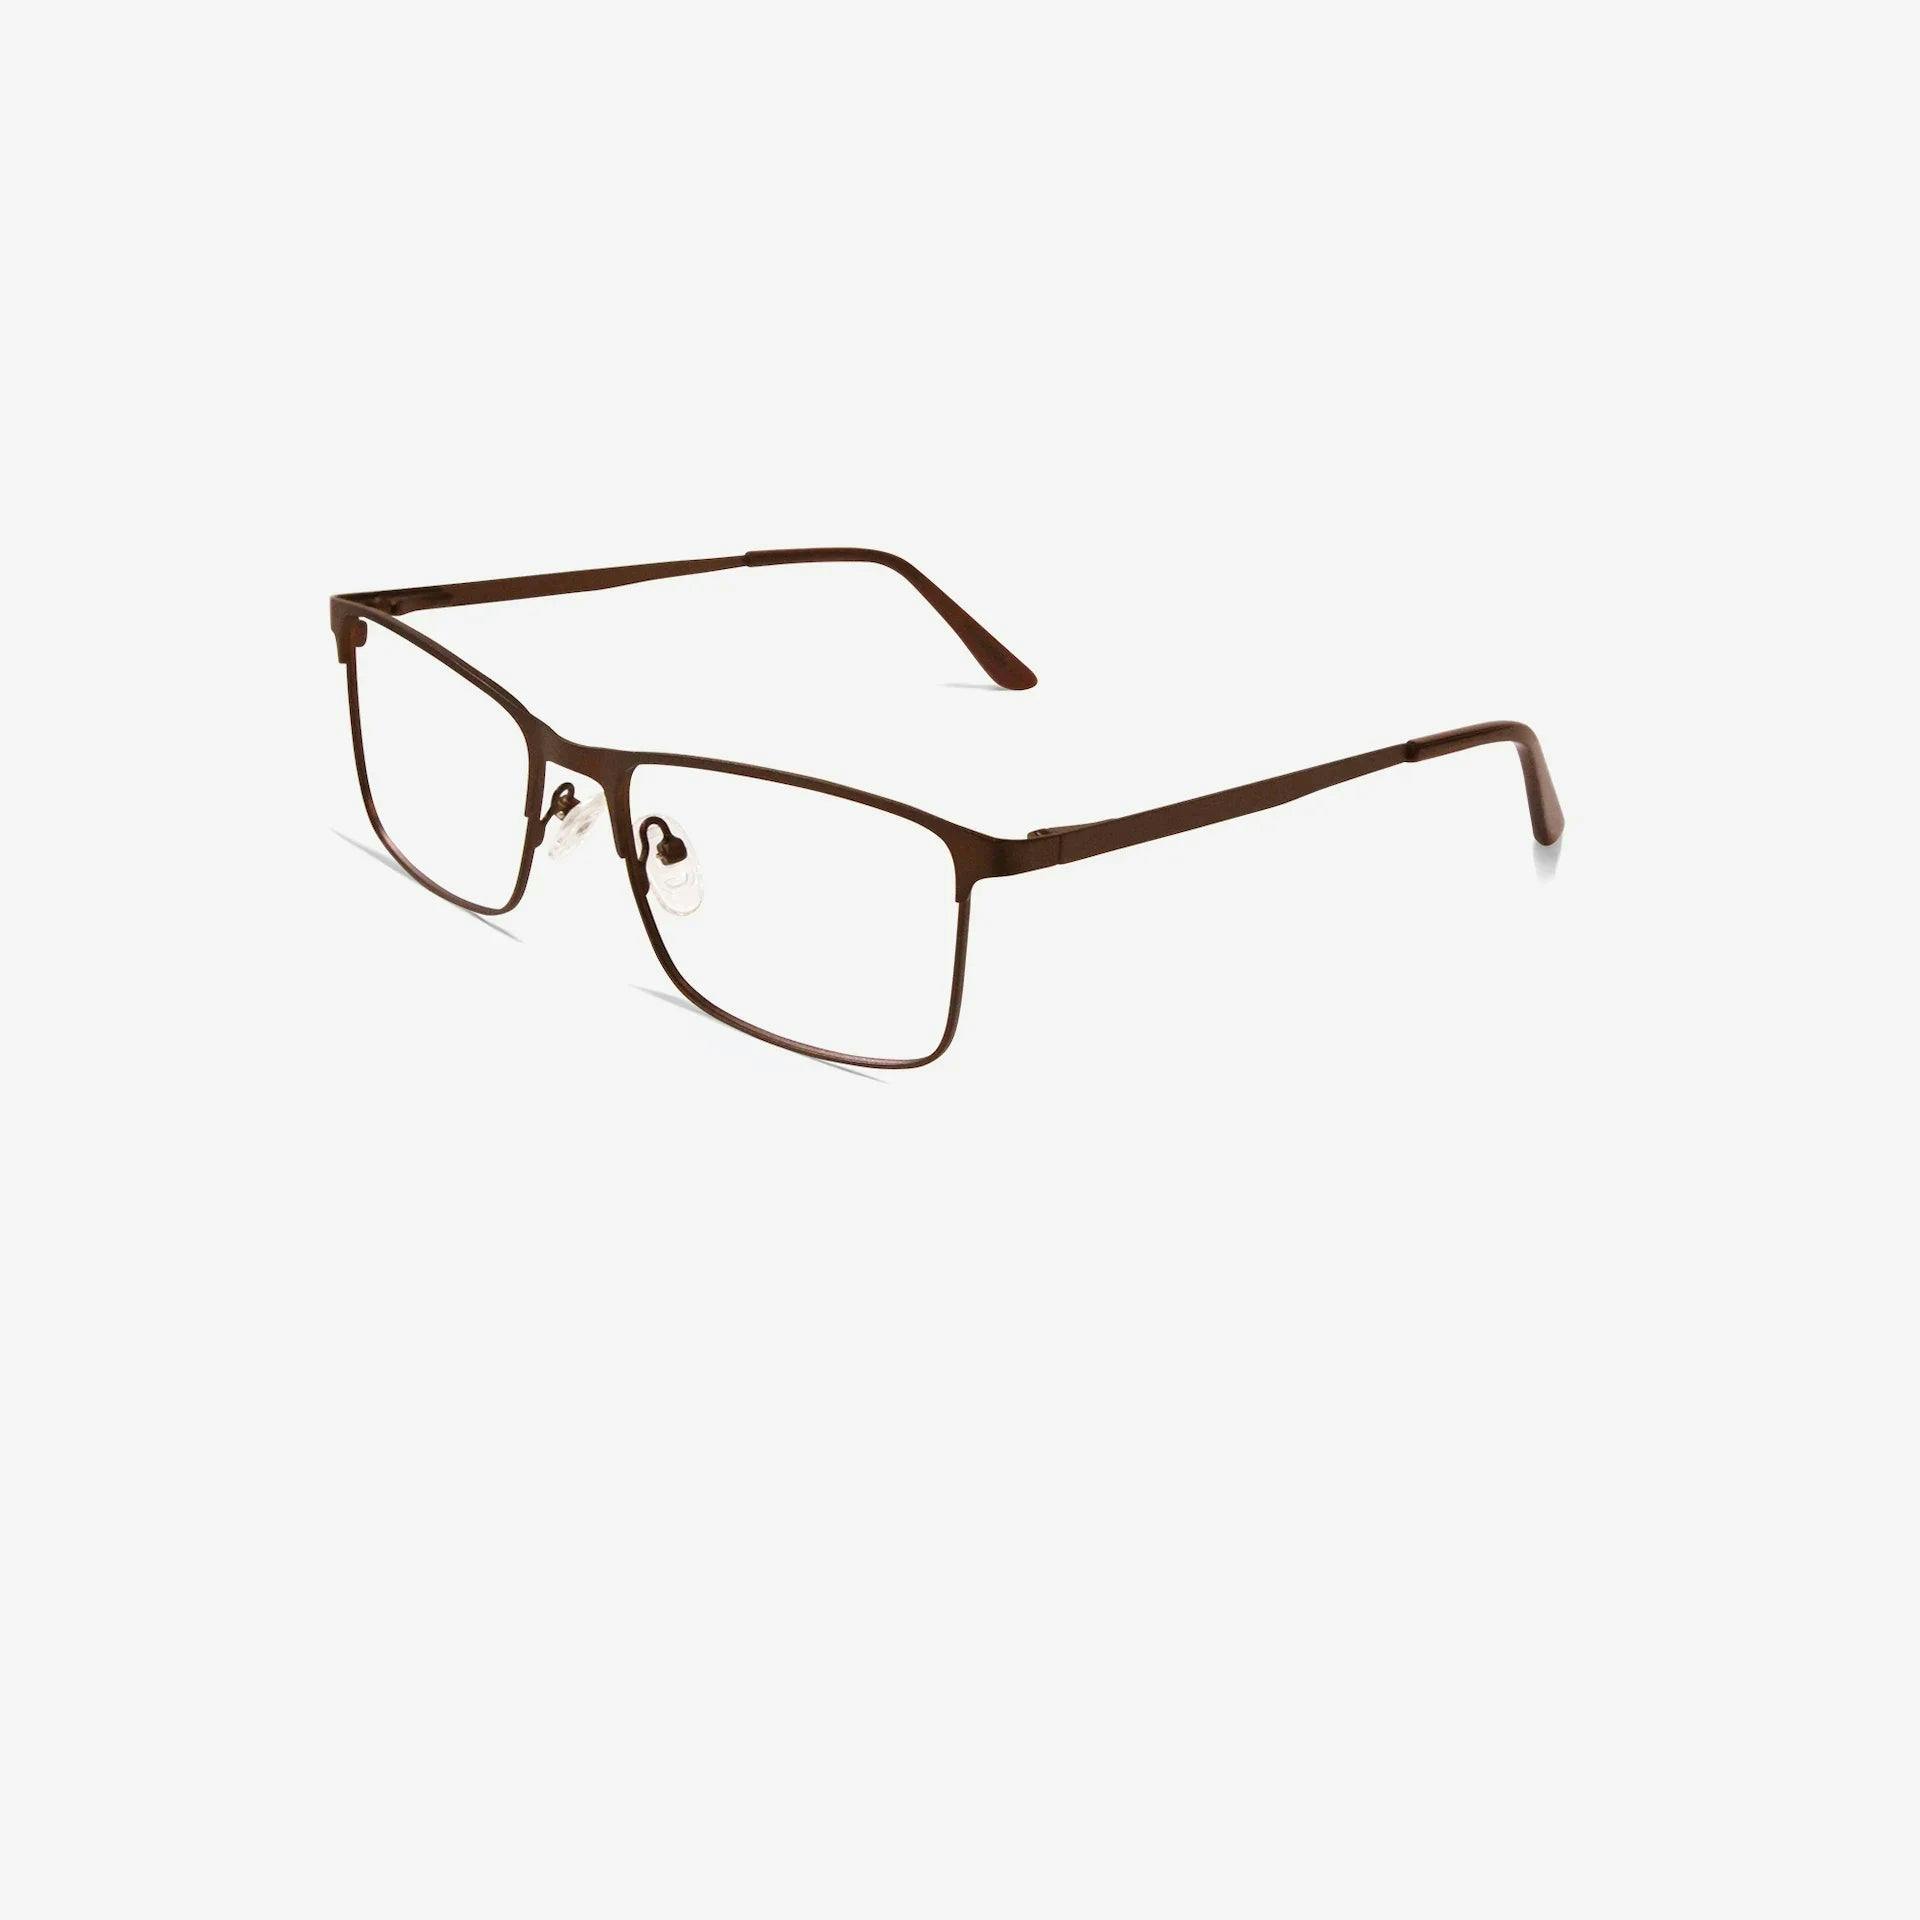 Huxley glasses | Superior Brown 